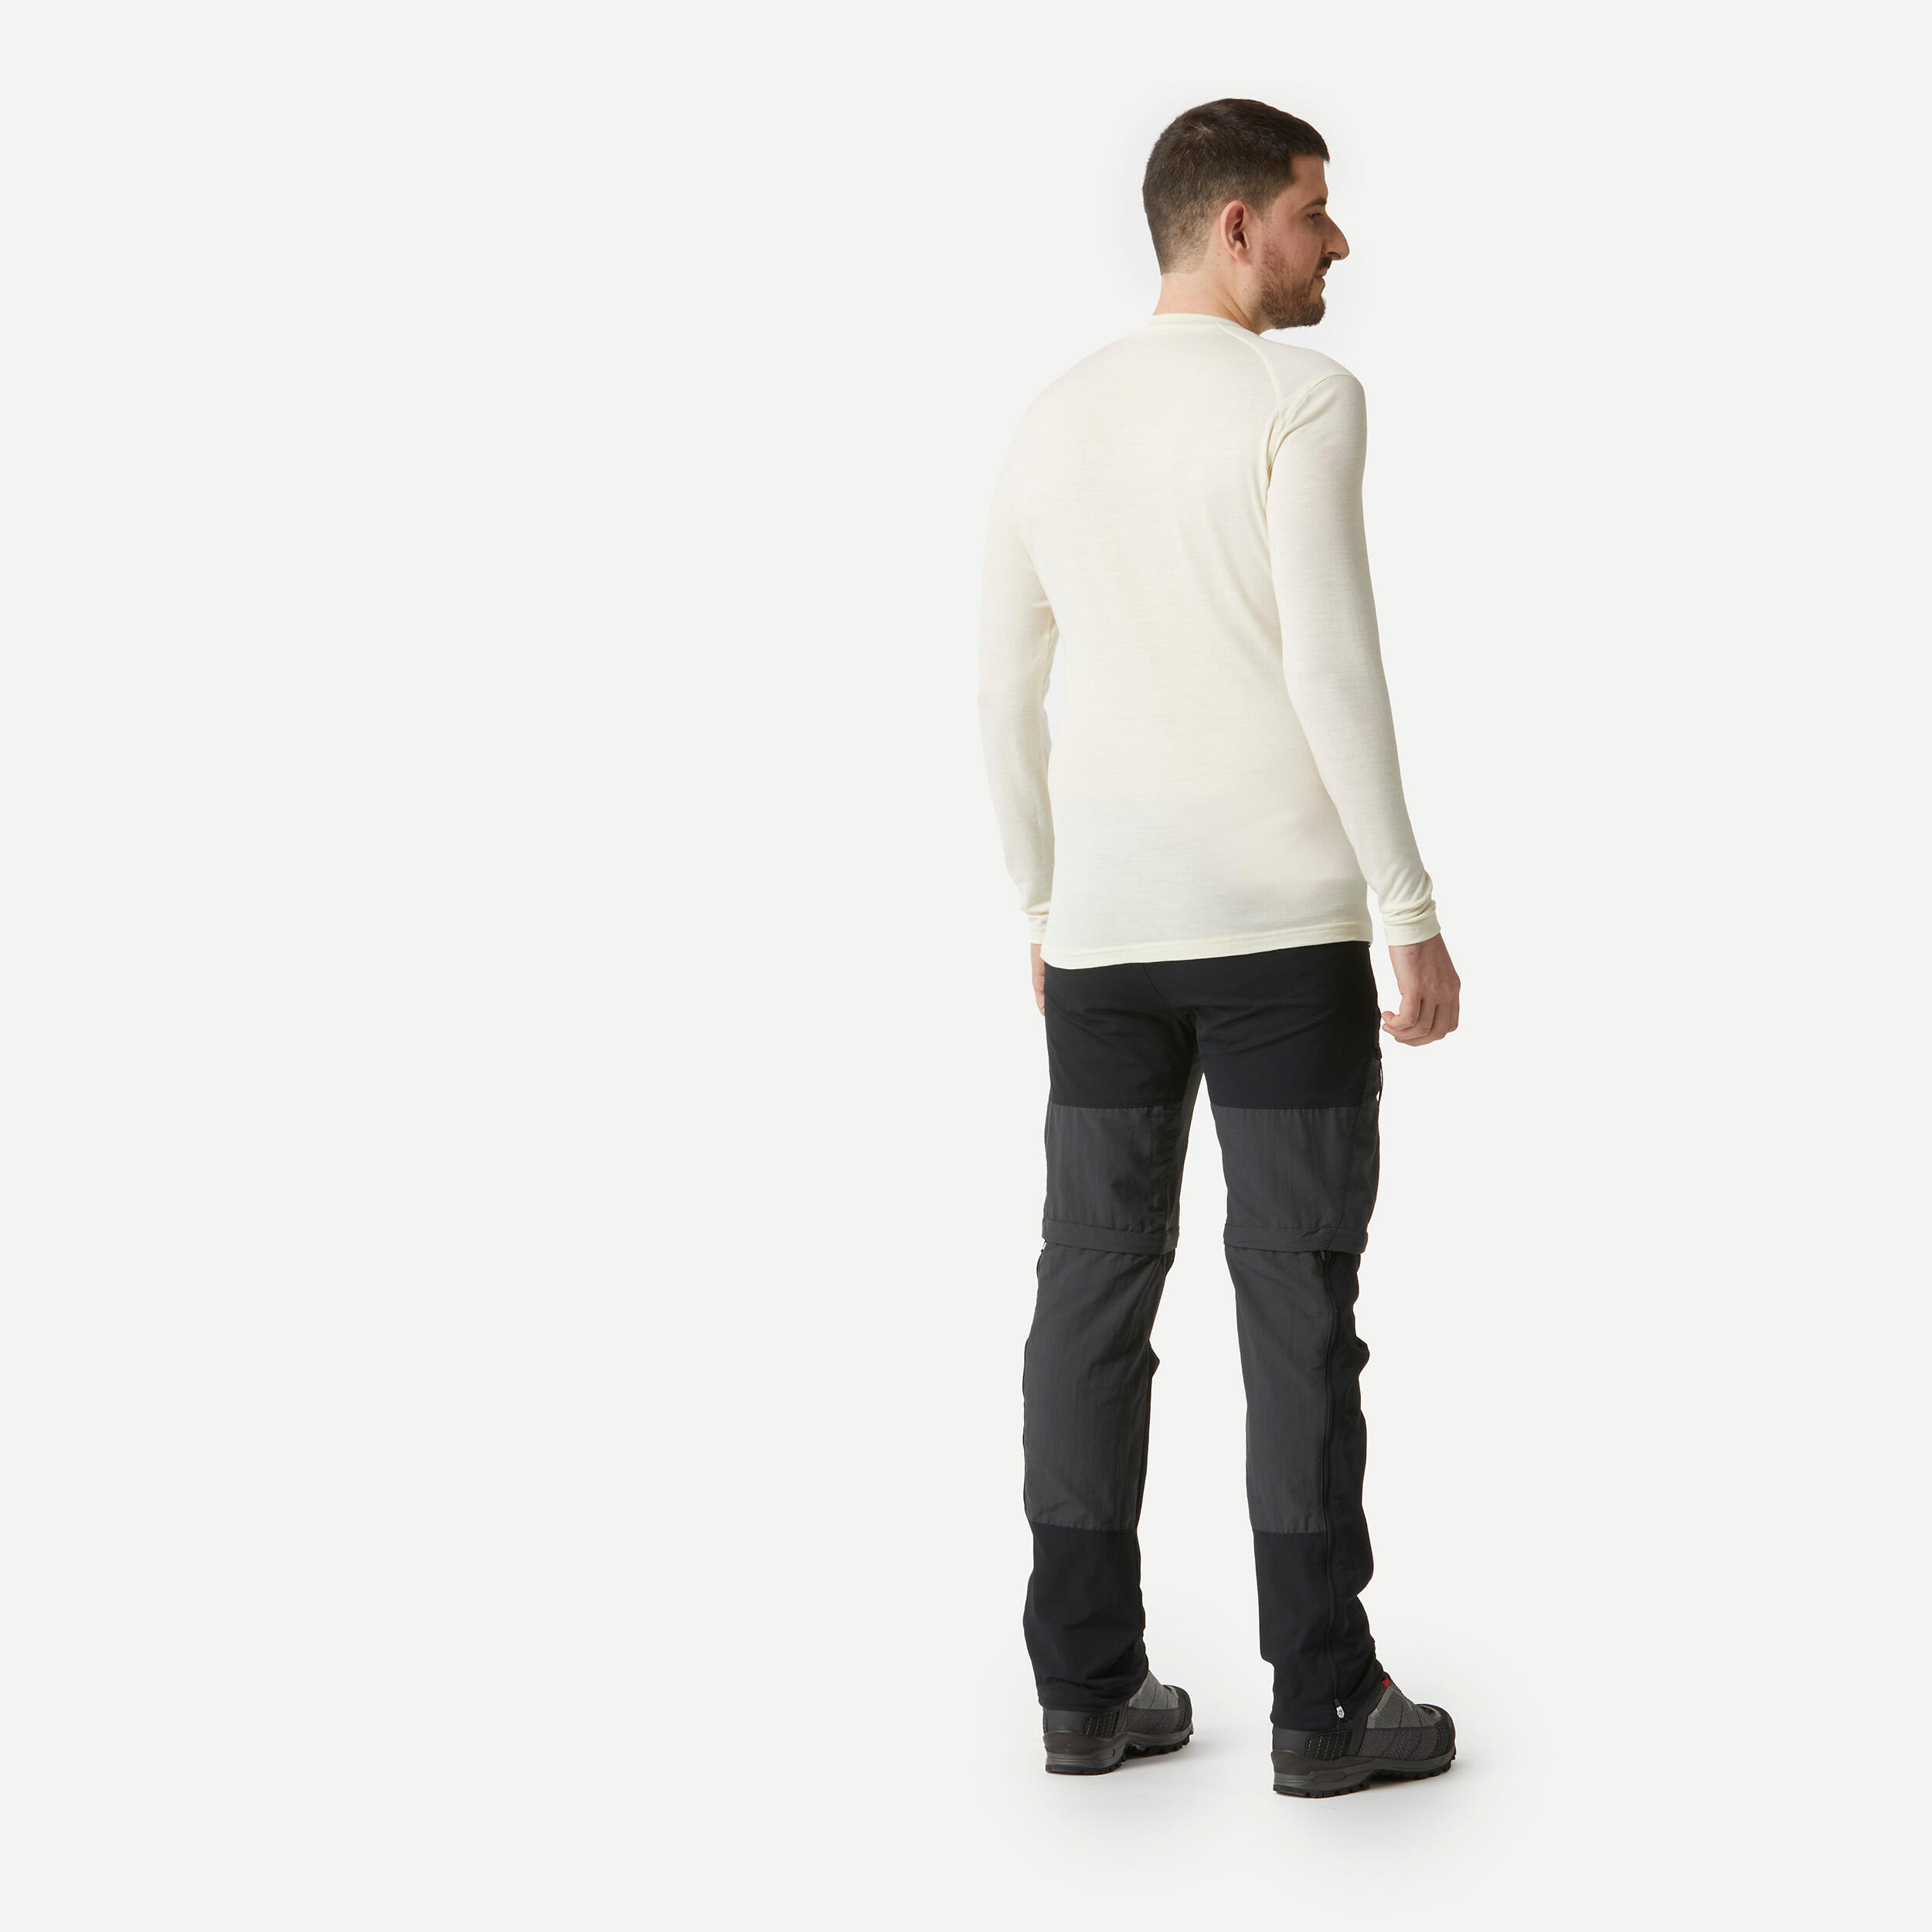 Men's Long-sleeve 100% Merino Wool T-shirt - MT500 4/7